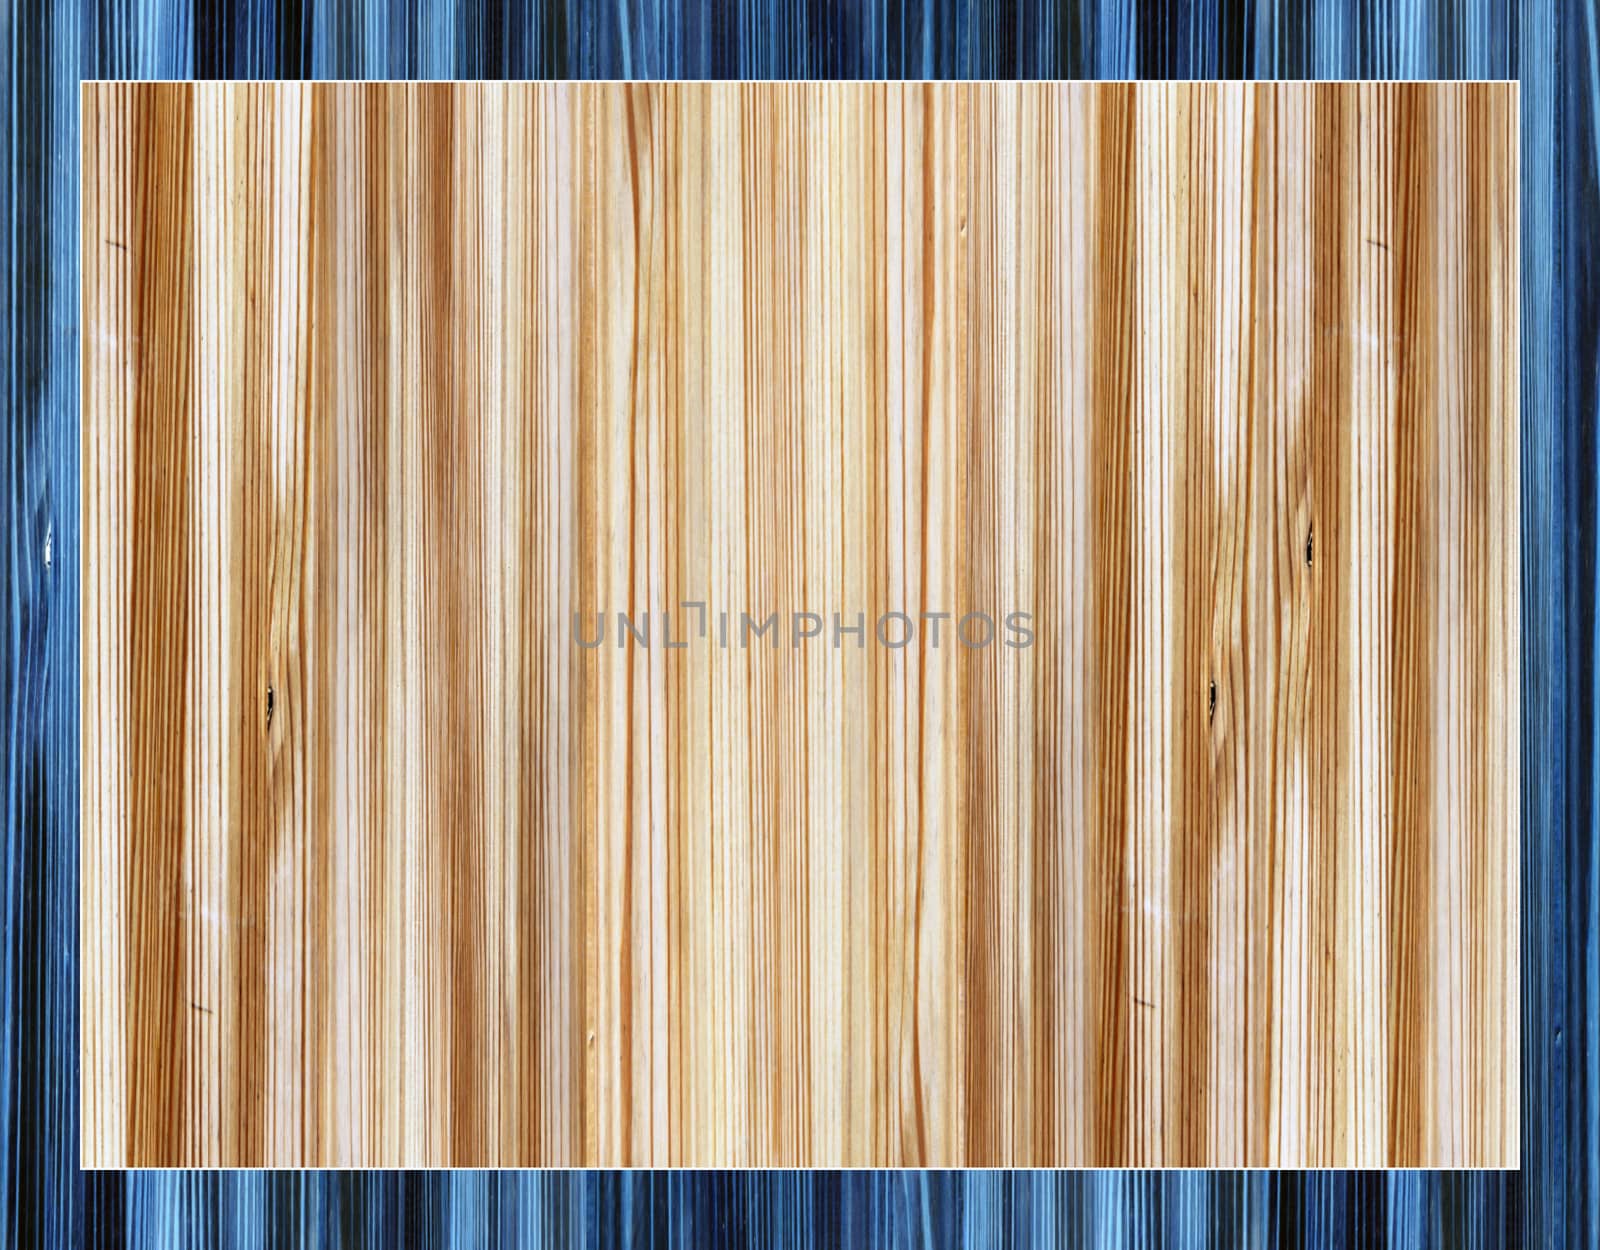 High resolution blonde wood texture with black vignette